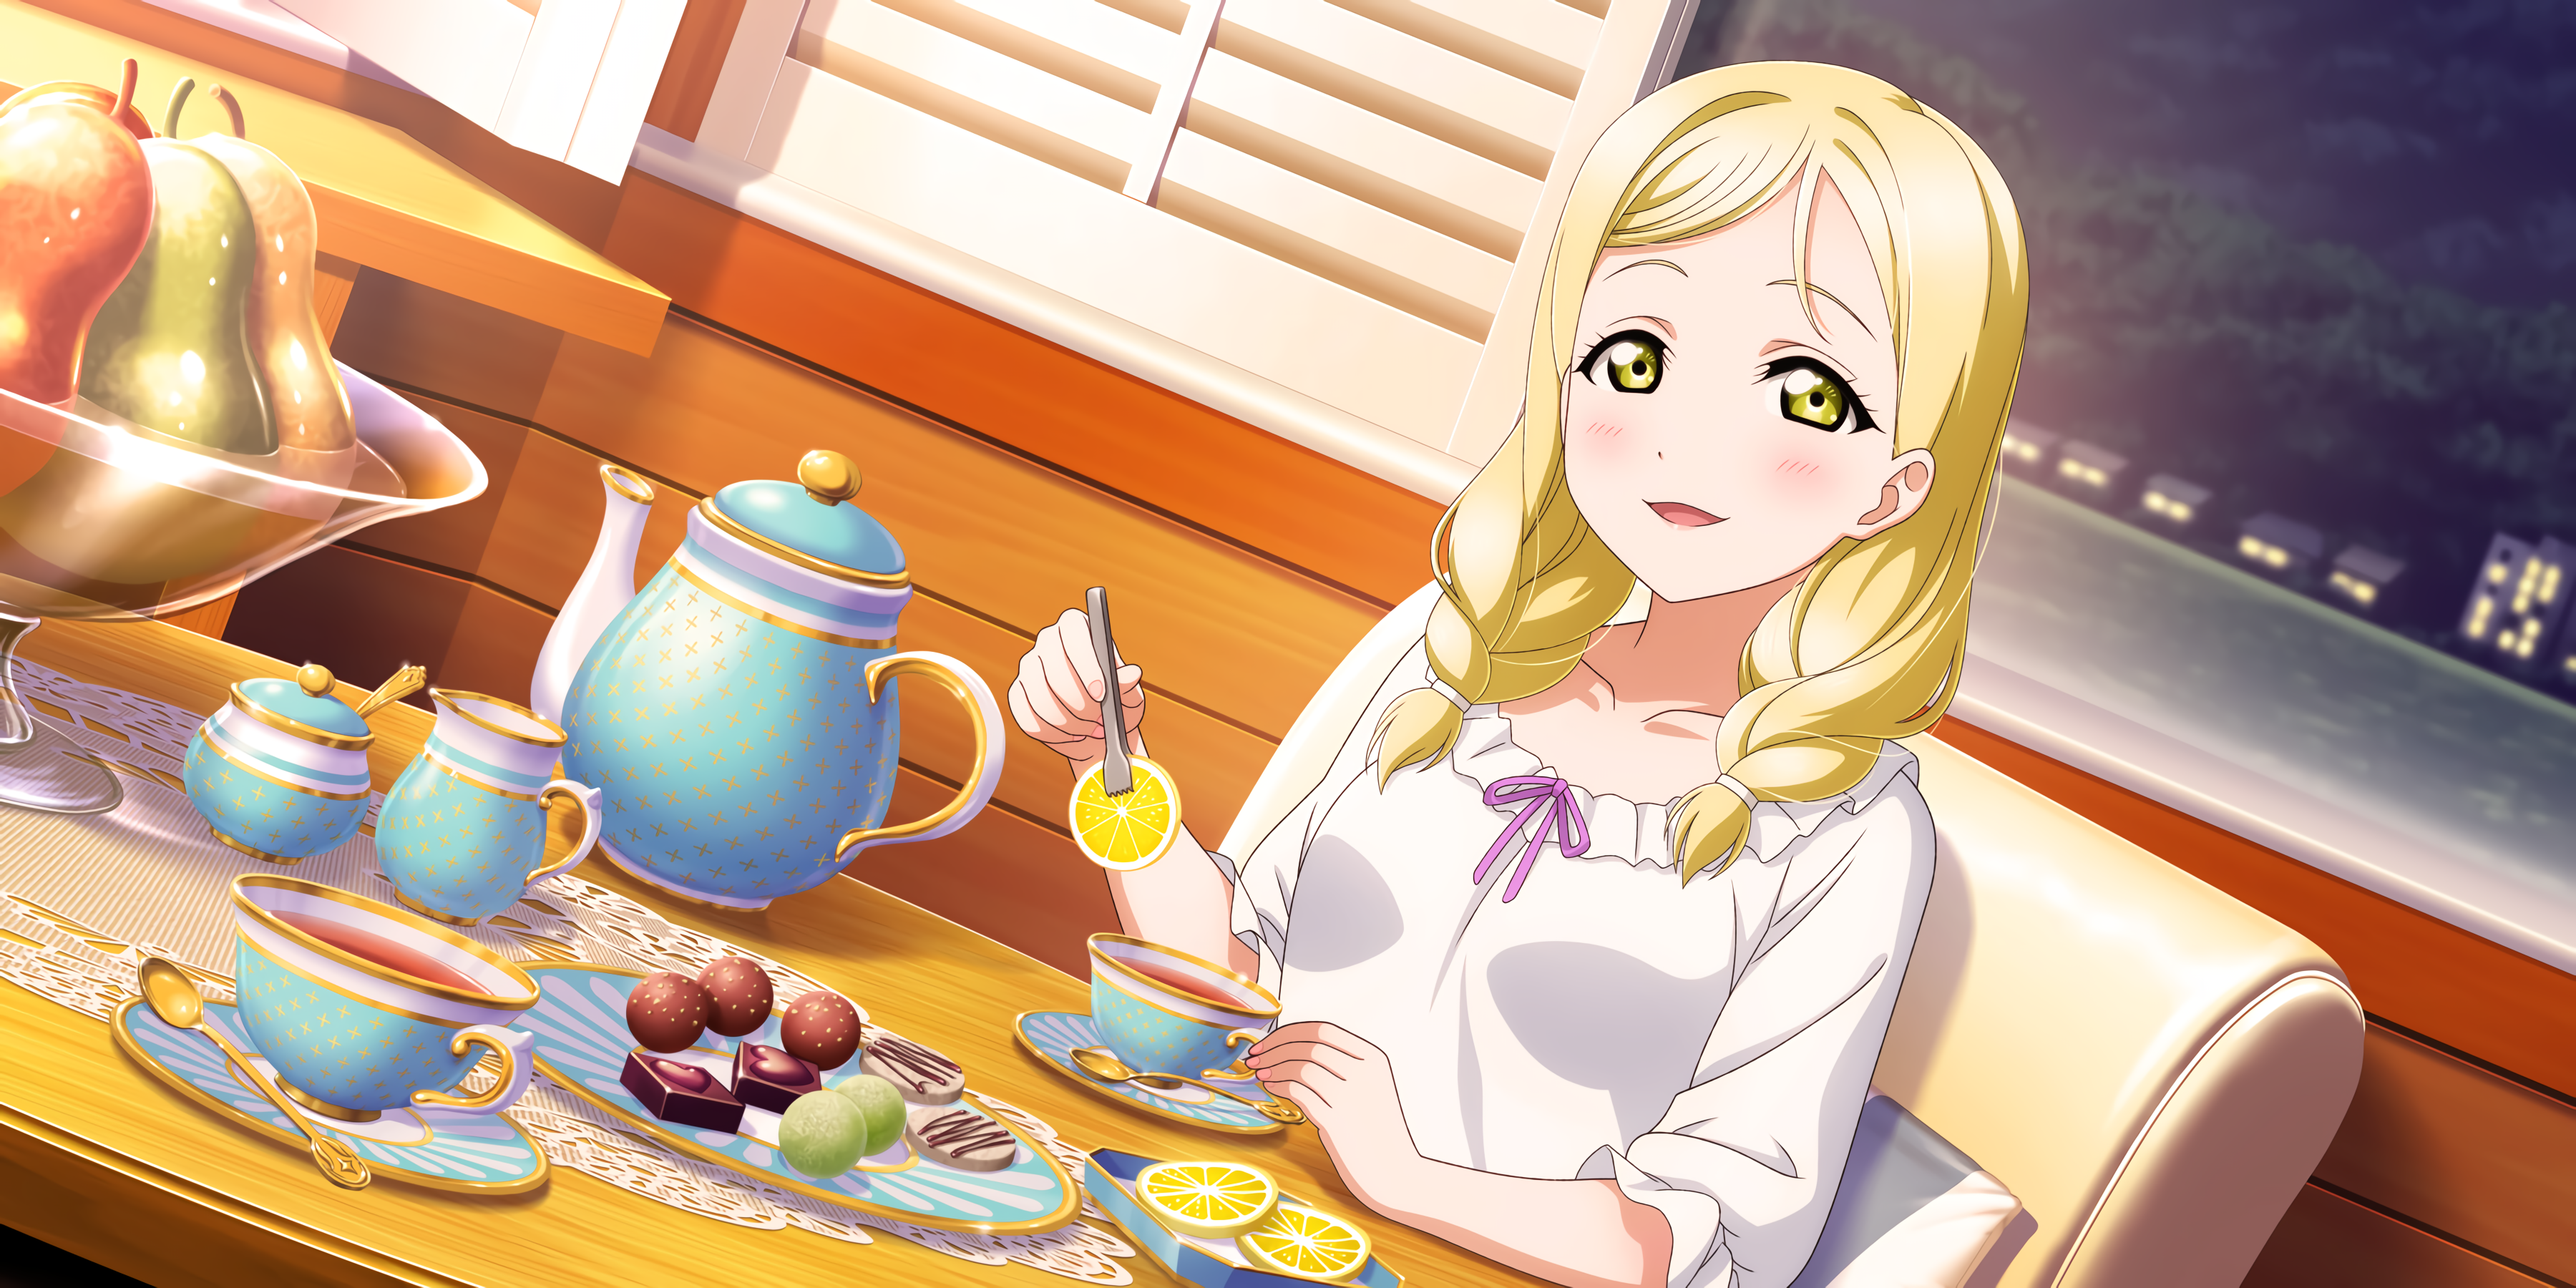 Anime 3600x1800 Ohara Mari Love Live! Sunshine Love Live! anime anime girls blonde yellow eyes sweets lemons